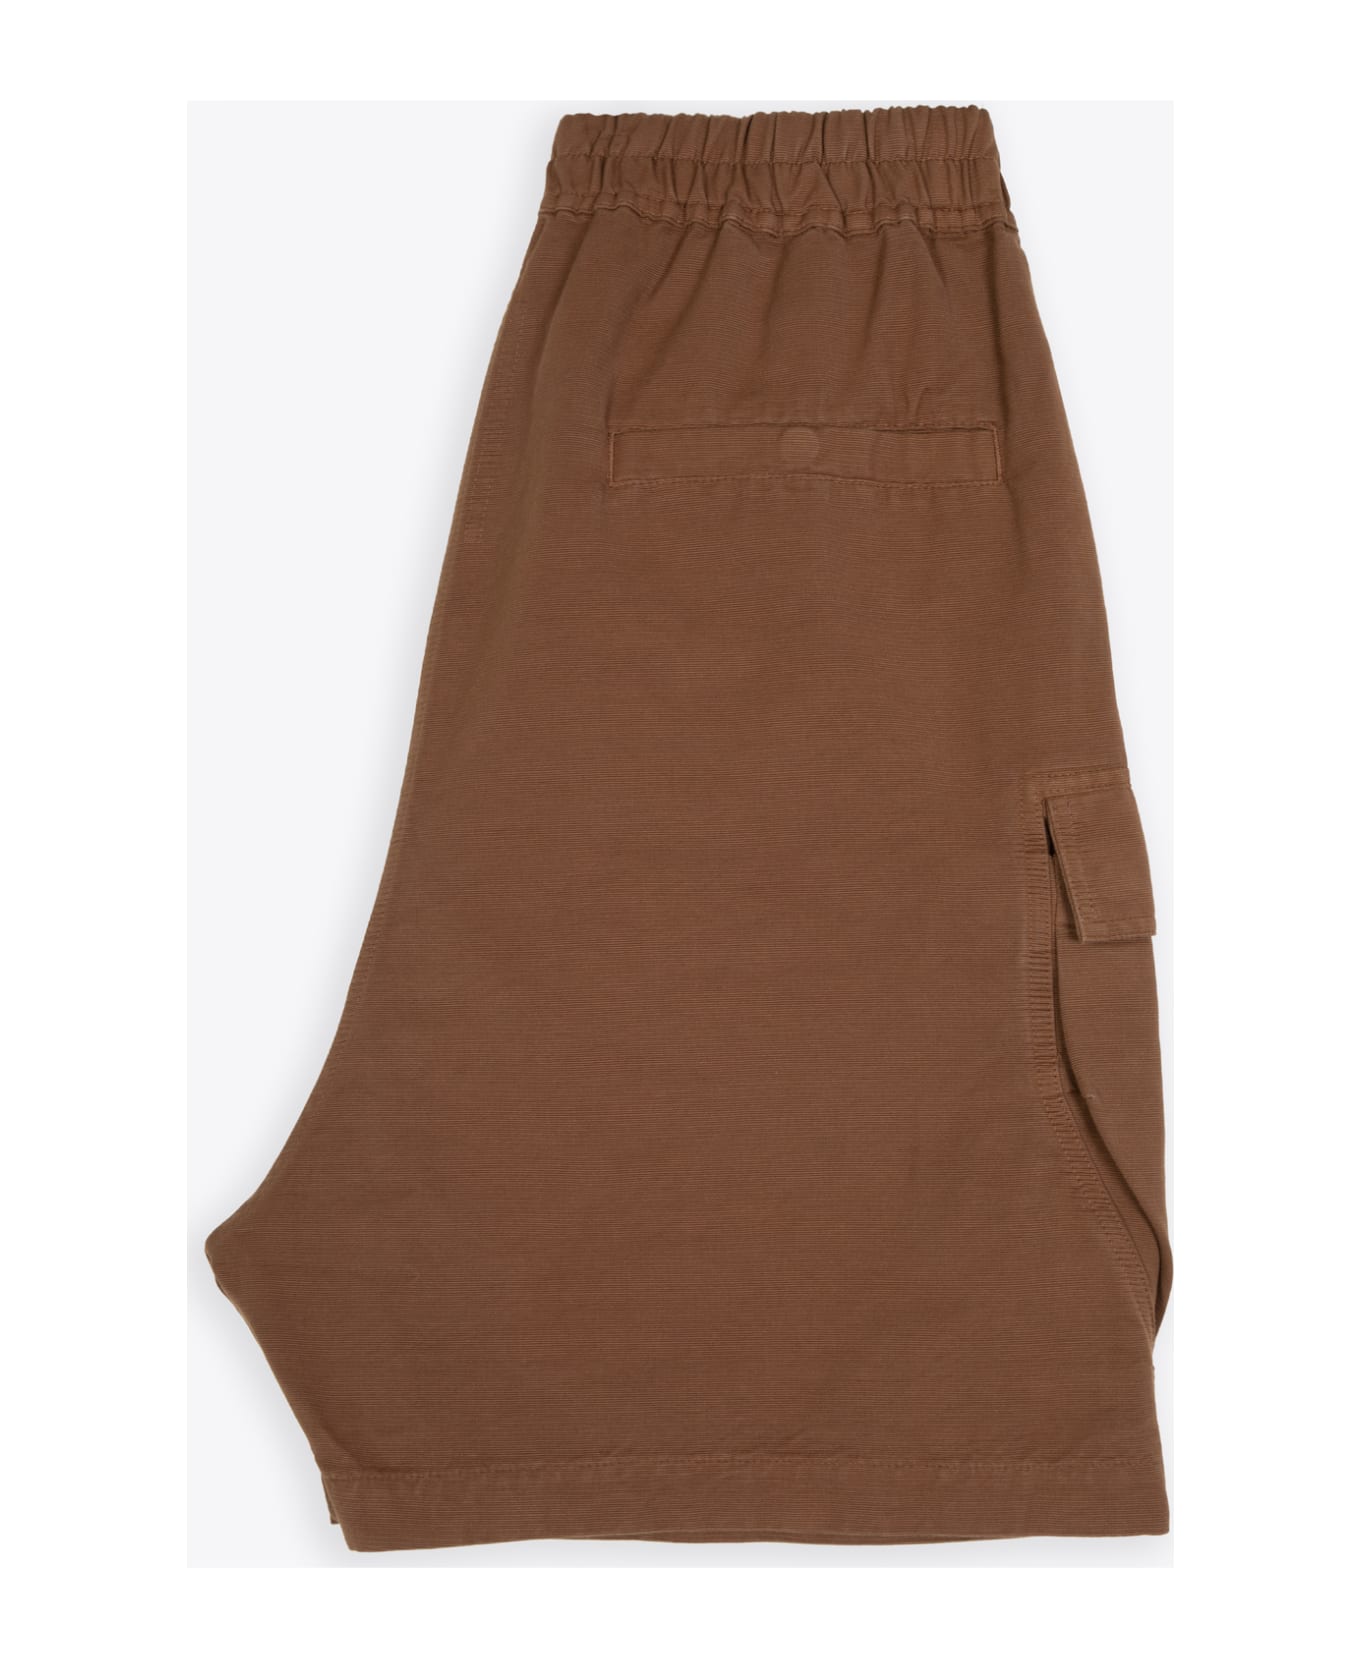 DRKSHDW Cargobela Shorts Brown Cotton Baggy Cargo Shorts - Cargobela Shorts - Cachi